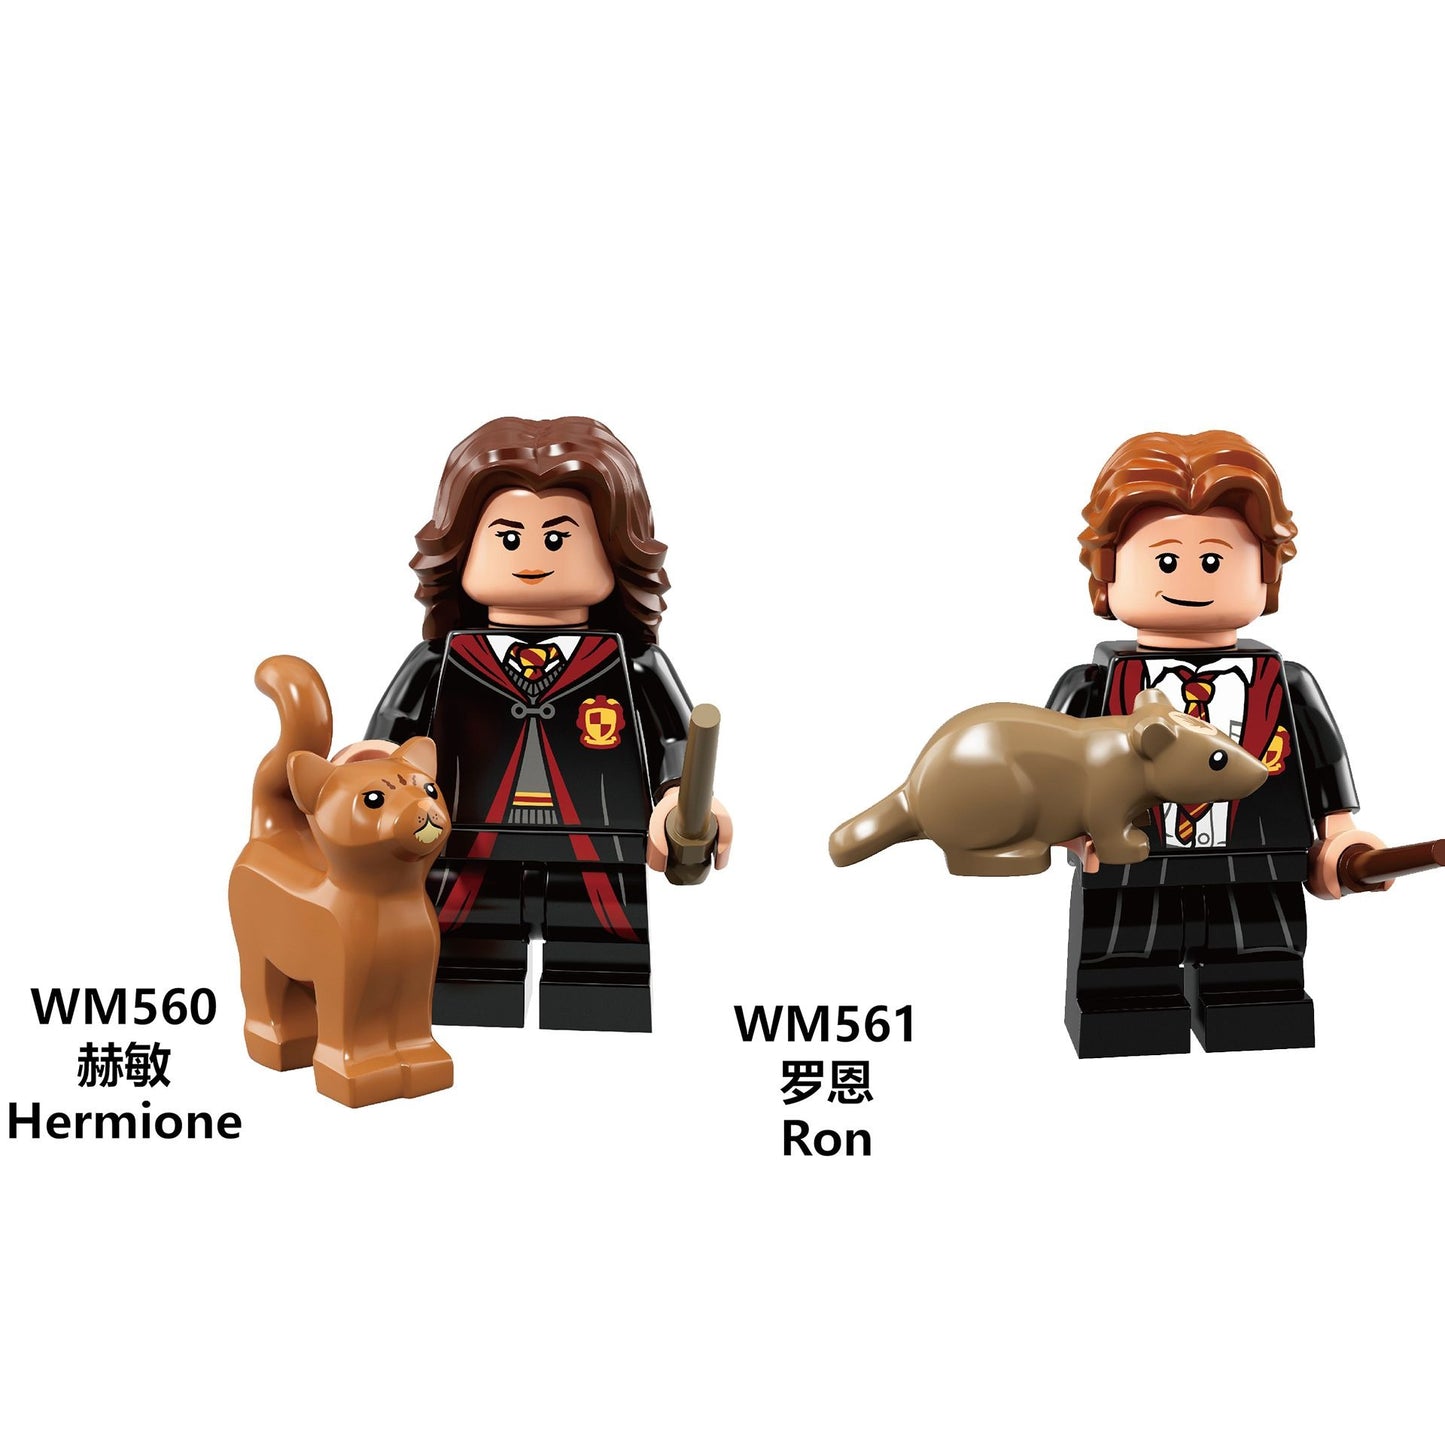 Harry Potter Mini Figures - Set of 8